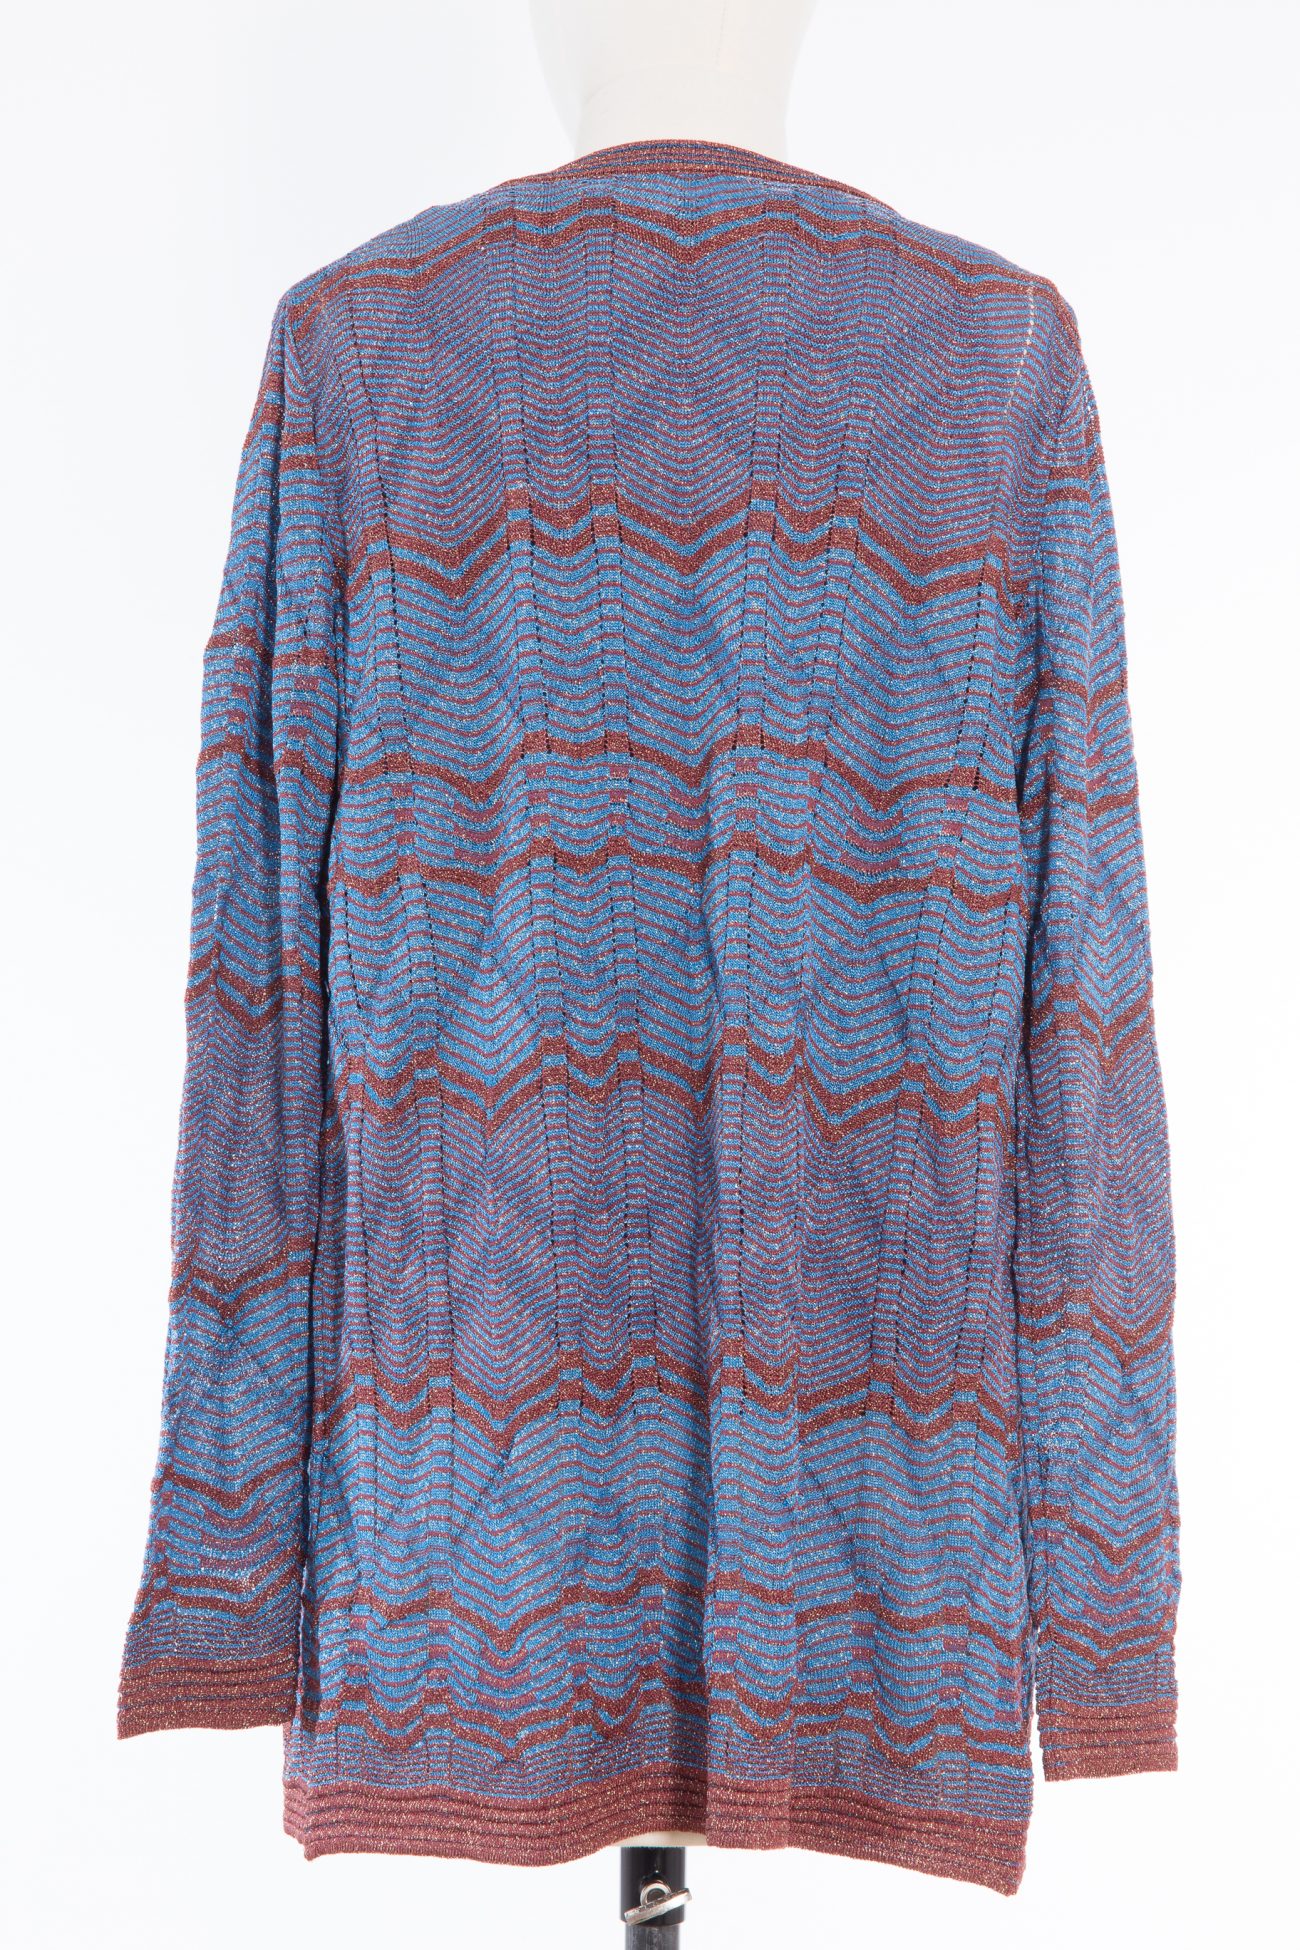 Missoni Metallic crochet knit sleeveless top and cardigan set